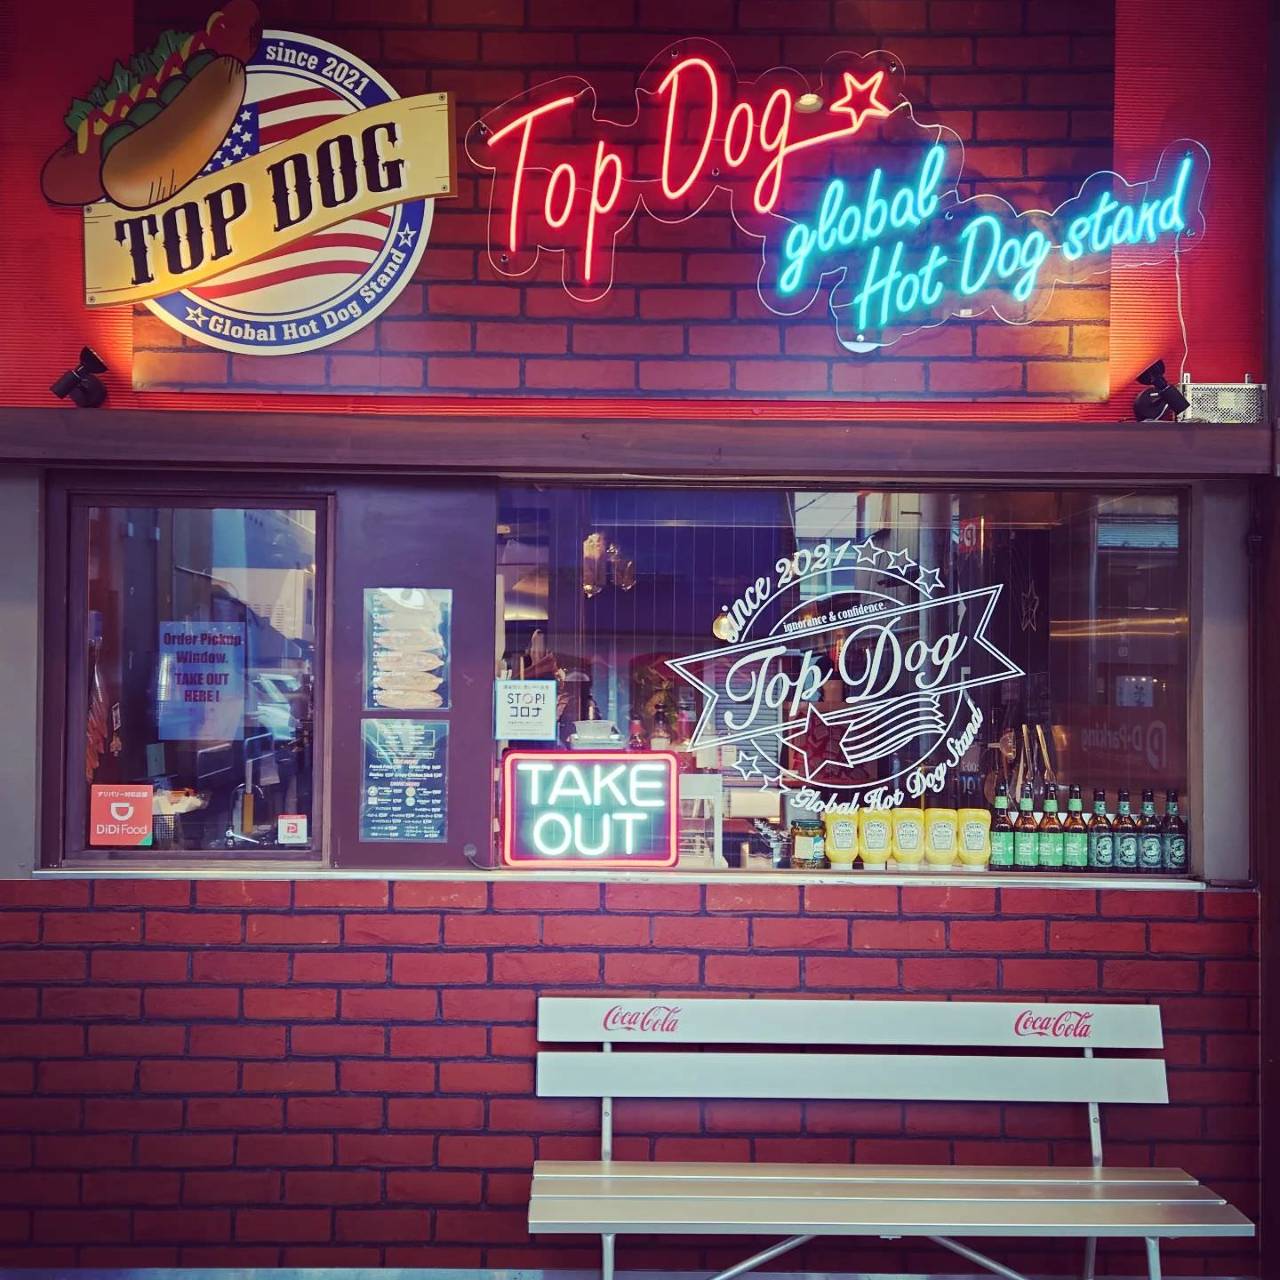 Top Dog 〜global hot dog stand〜